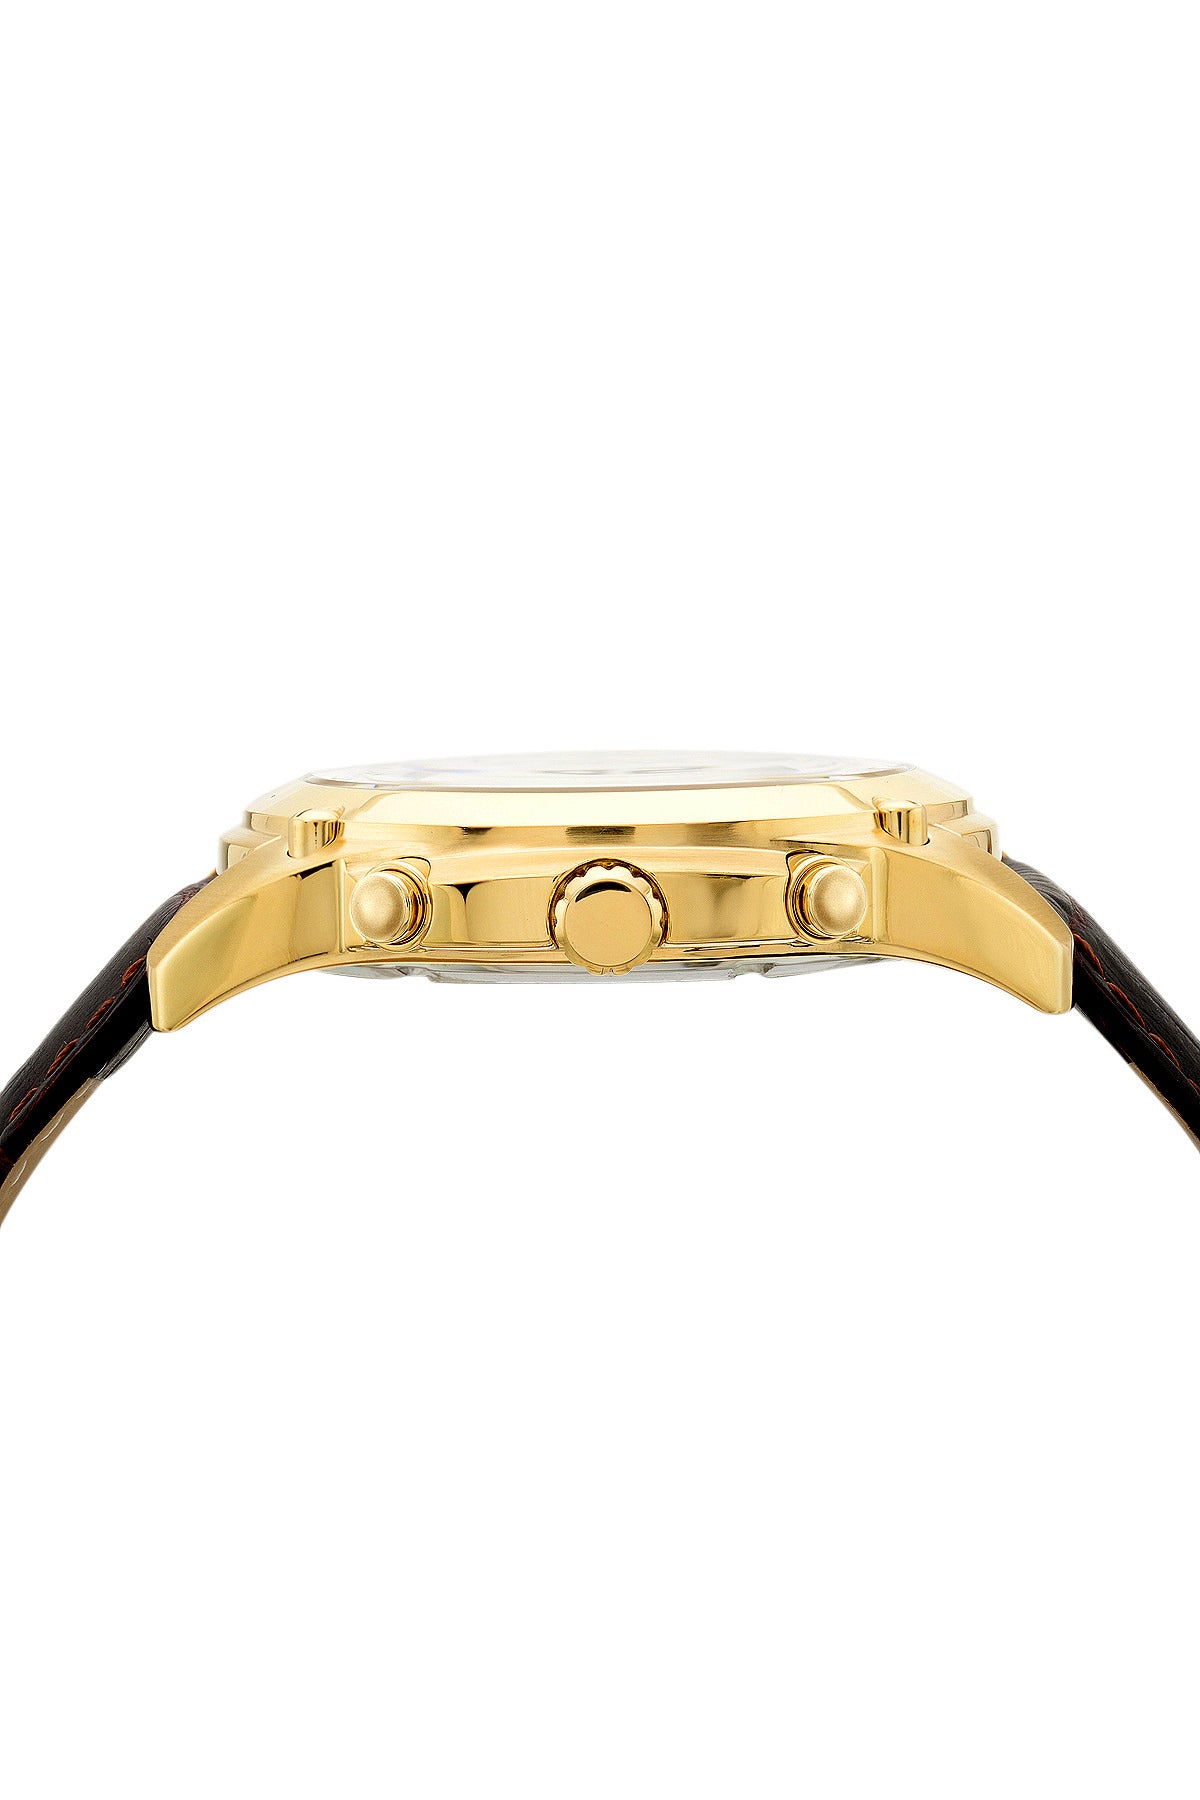 Porsamo Bleu Nathan luxury chronograph men's watch, genuine leather band, gold, brown 641BNAL